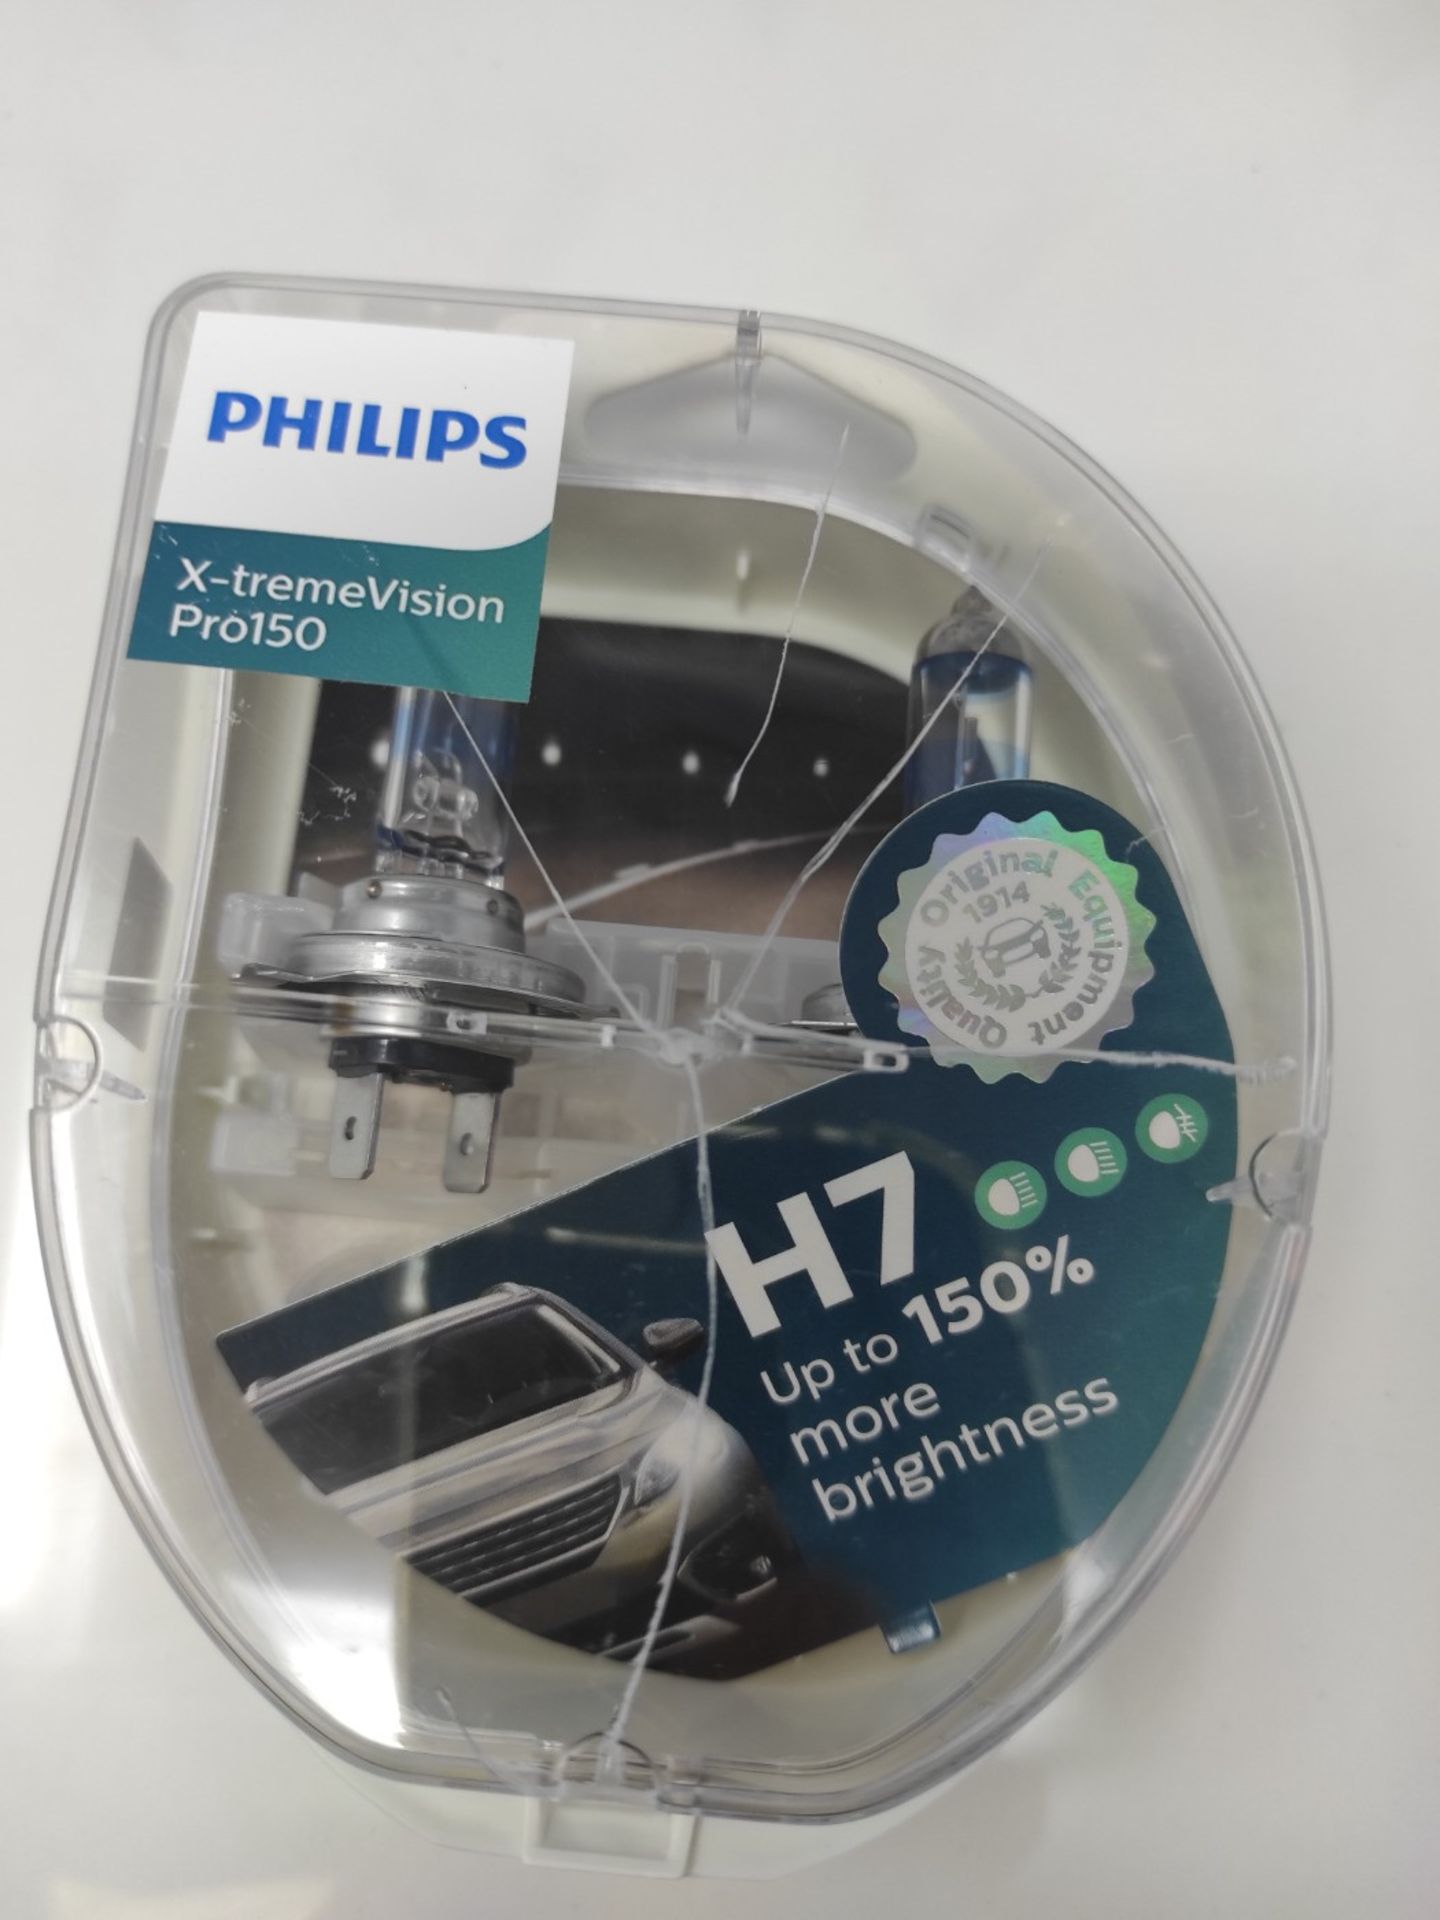 Philips X-tremeVision Pro150 H7 car headlight bulb +150%, set of 2 - Image 2 of 2